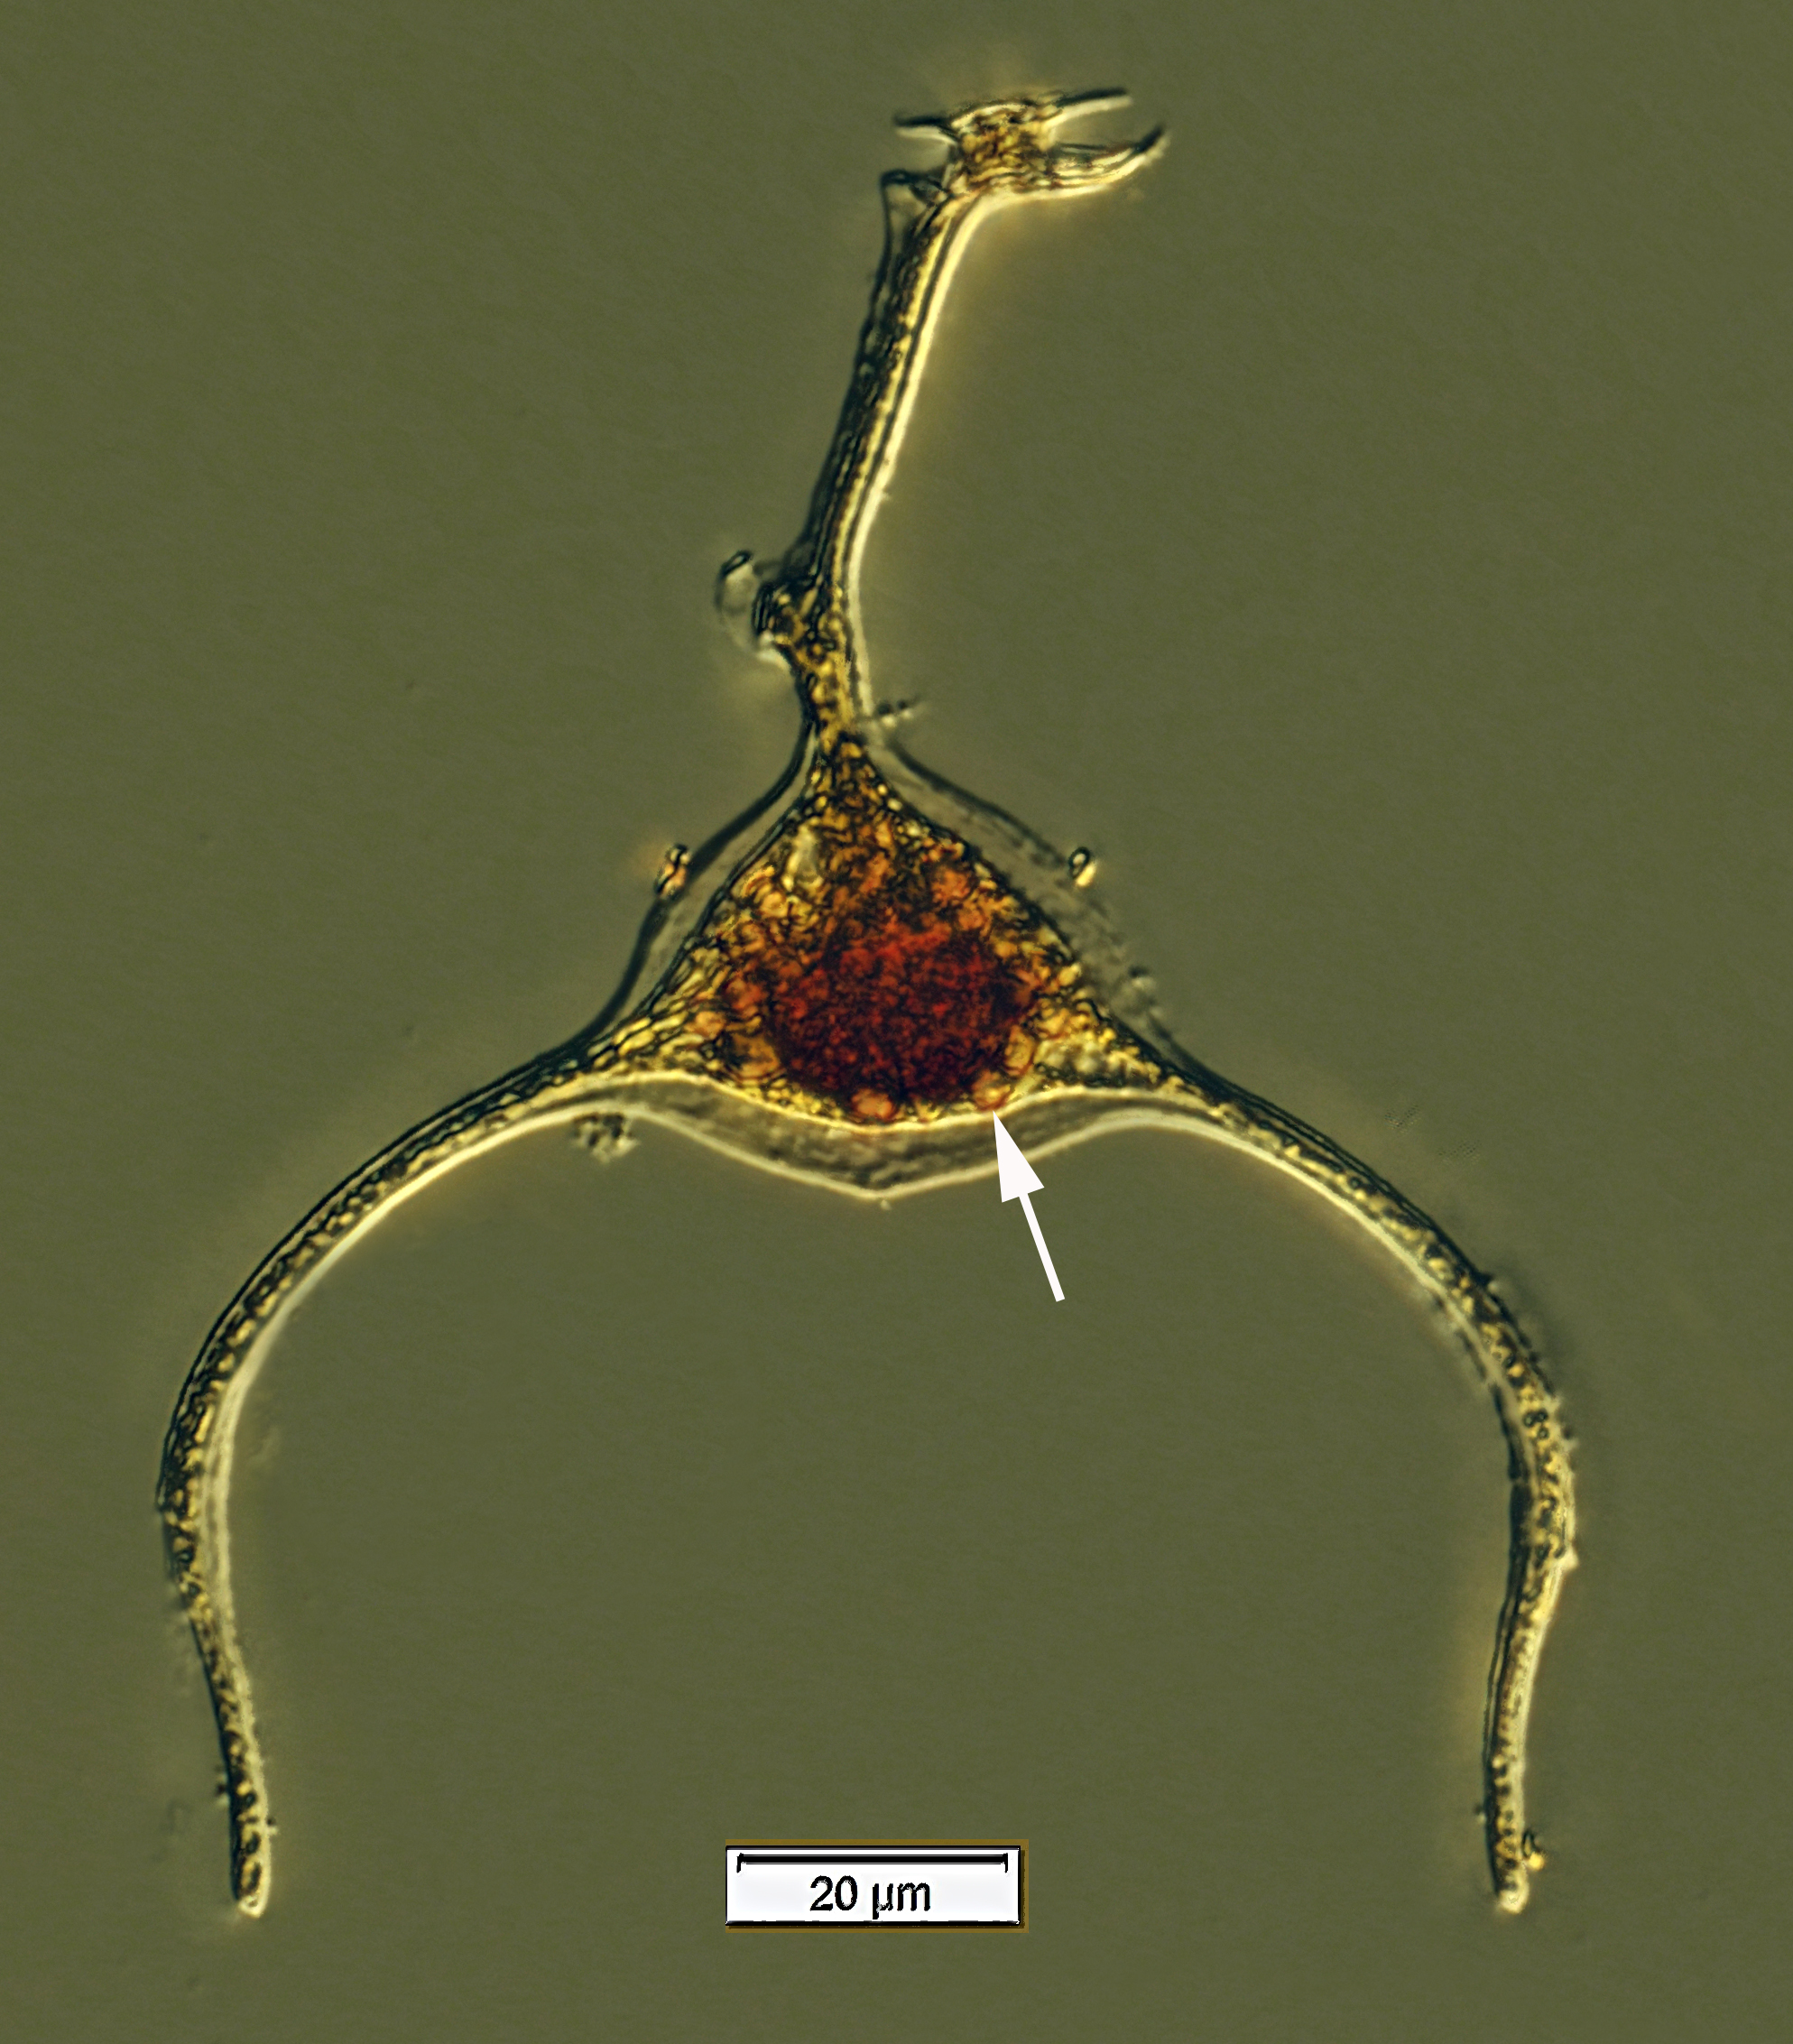 Triposolenia bicornis with endosymbionts